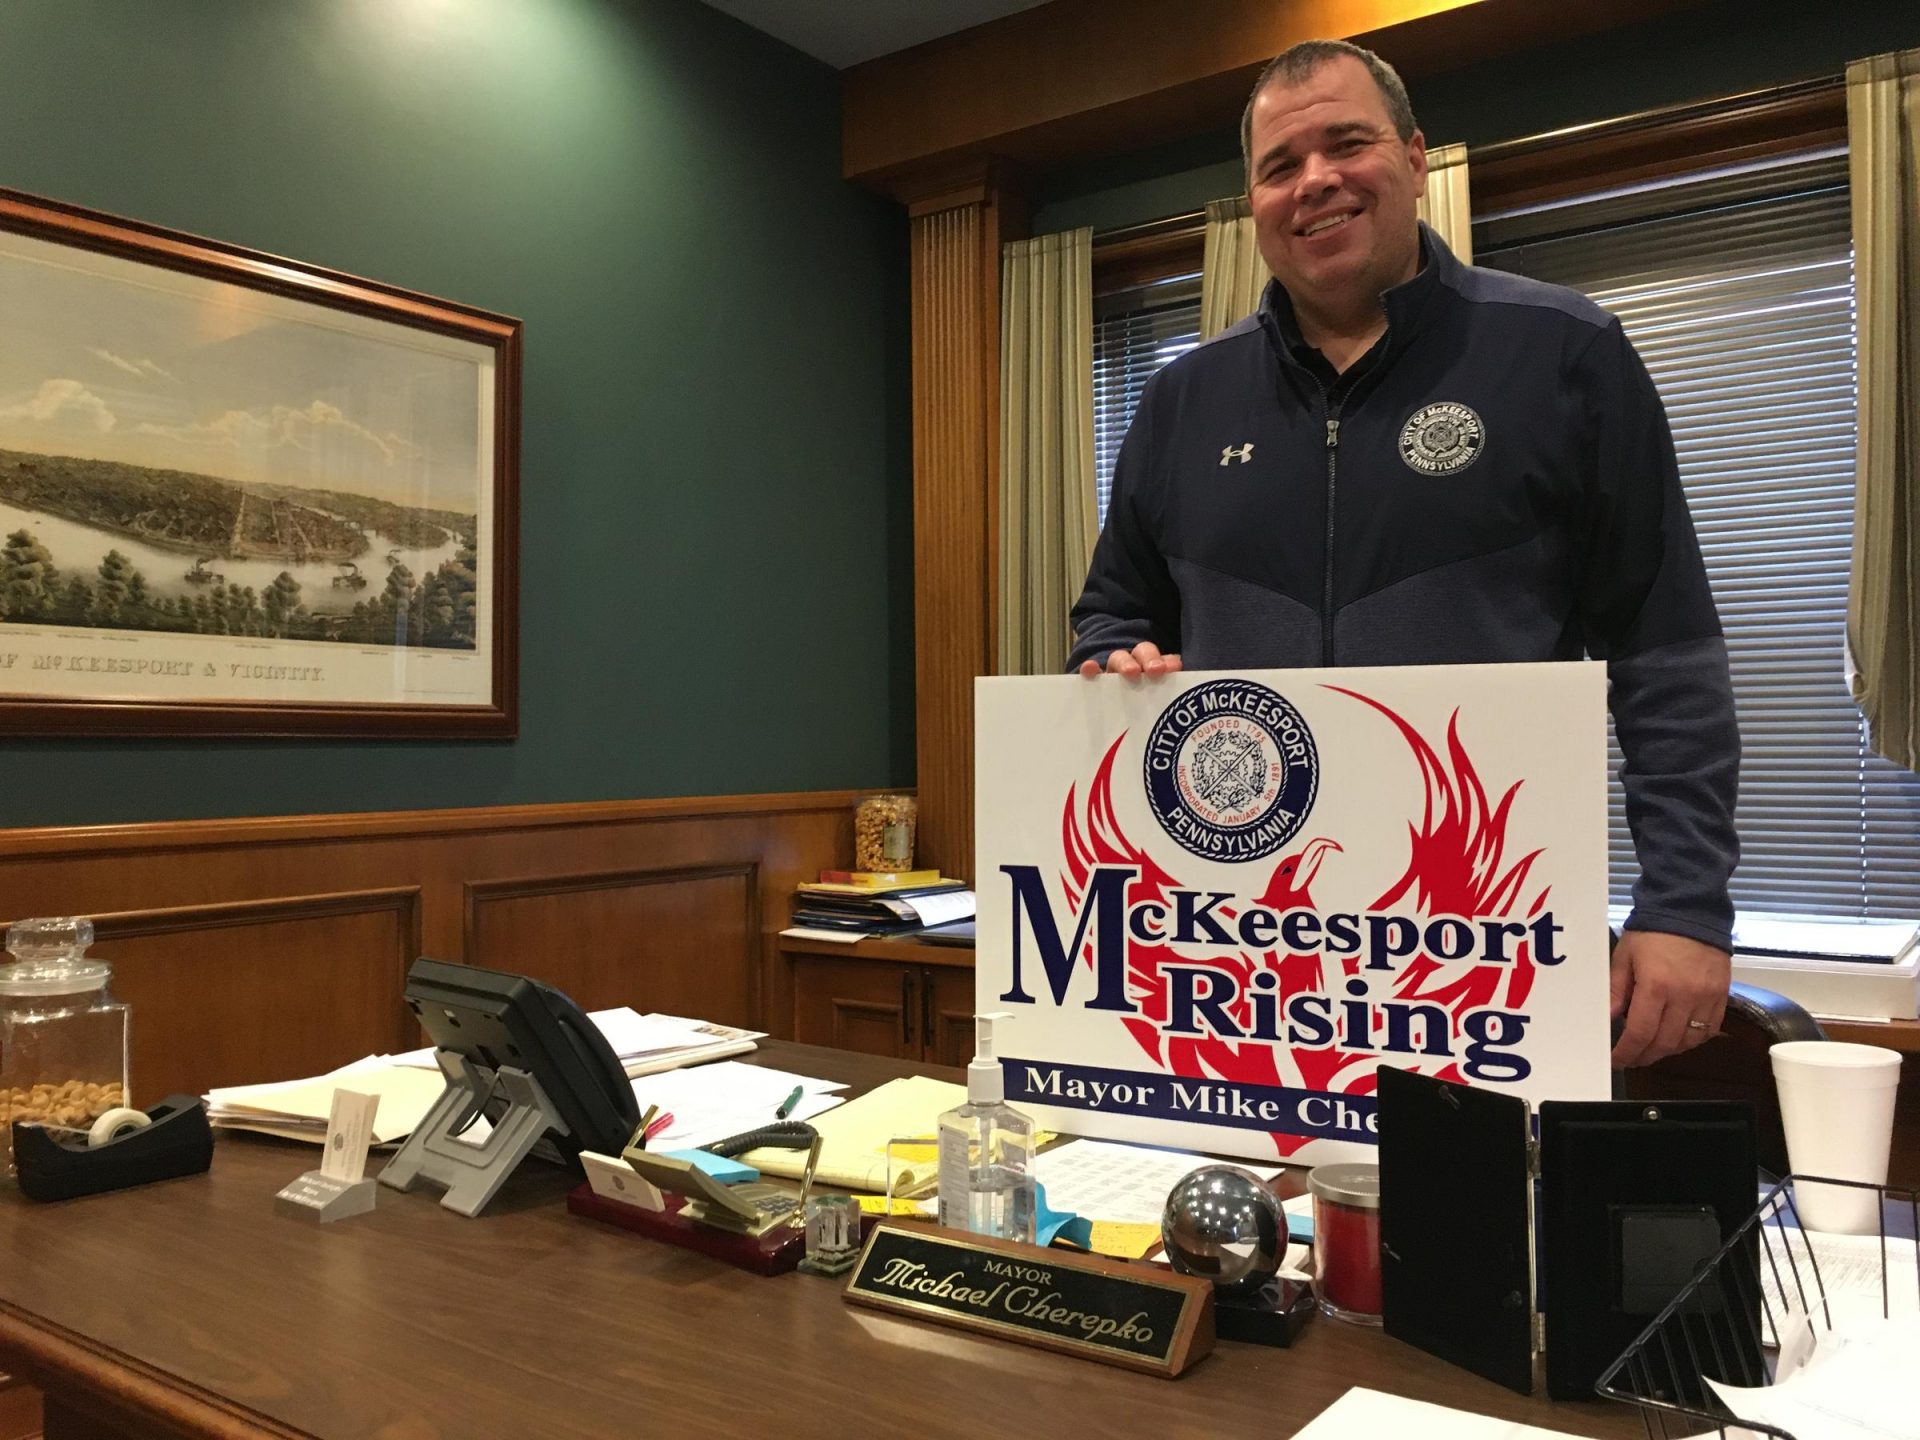 “McKeesport Rising” is the signature initiative of Mayor Michael Cherepko, now in his second term.